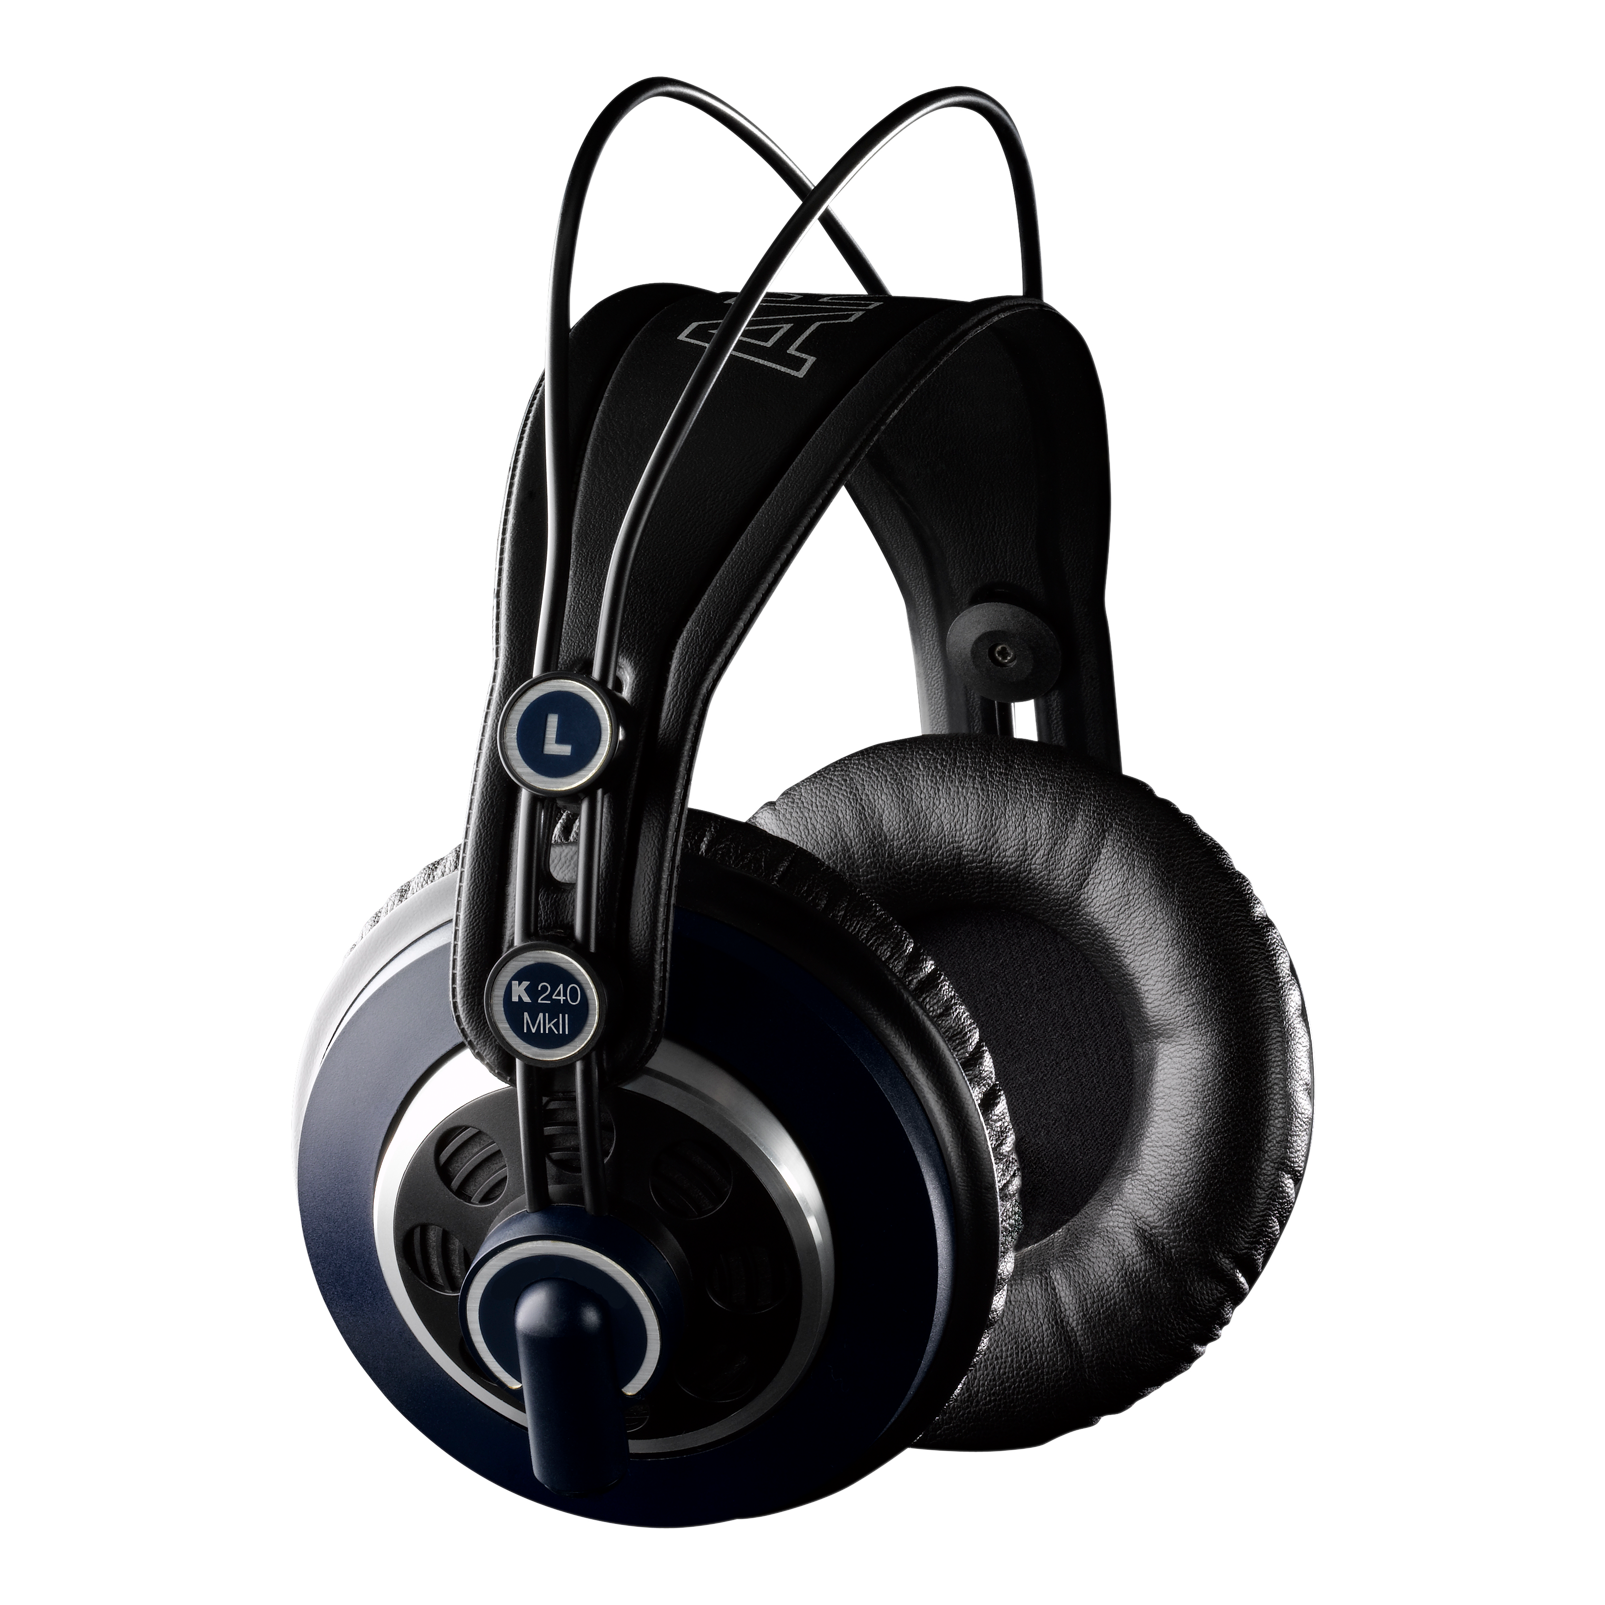 K240 MKII (B-Stock) - Black - Professional studio headphones - Hero